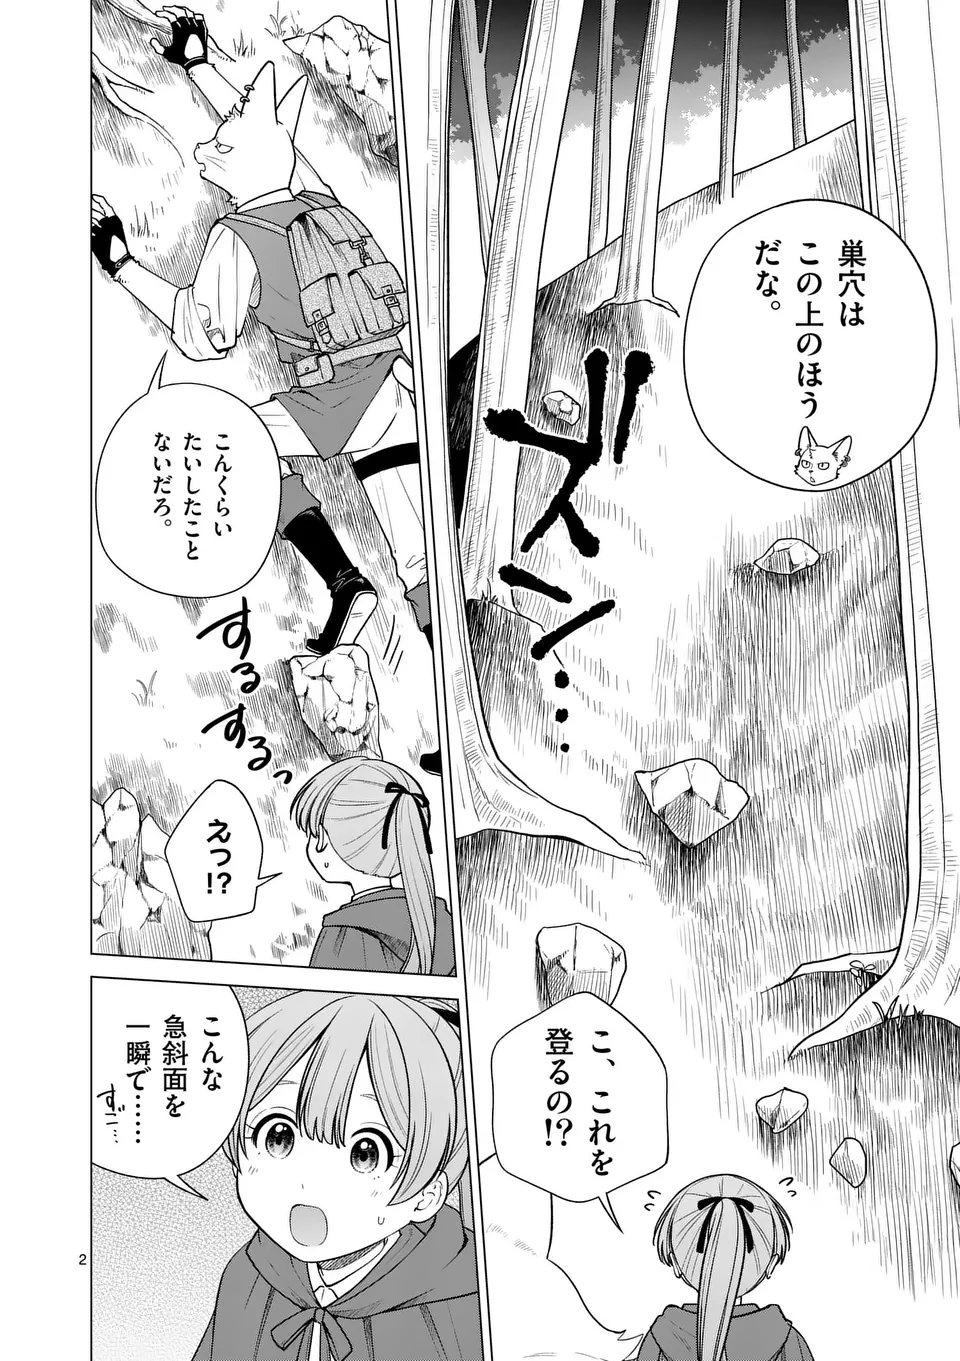 Isekai Pomeranian to Niji no Mofumofu Tabi - Chapter 10 - Page 2